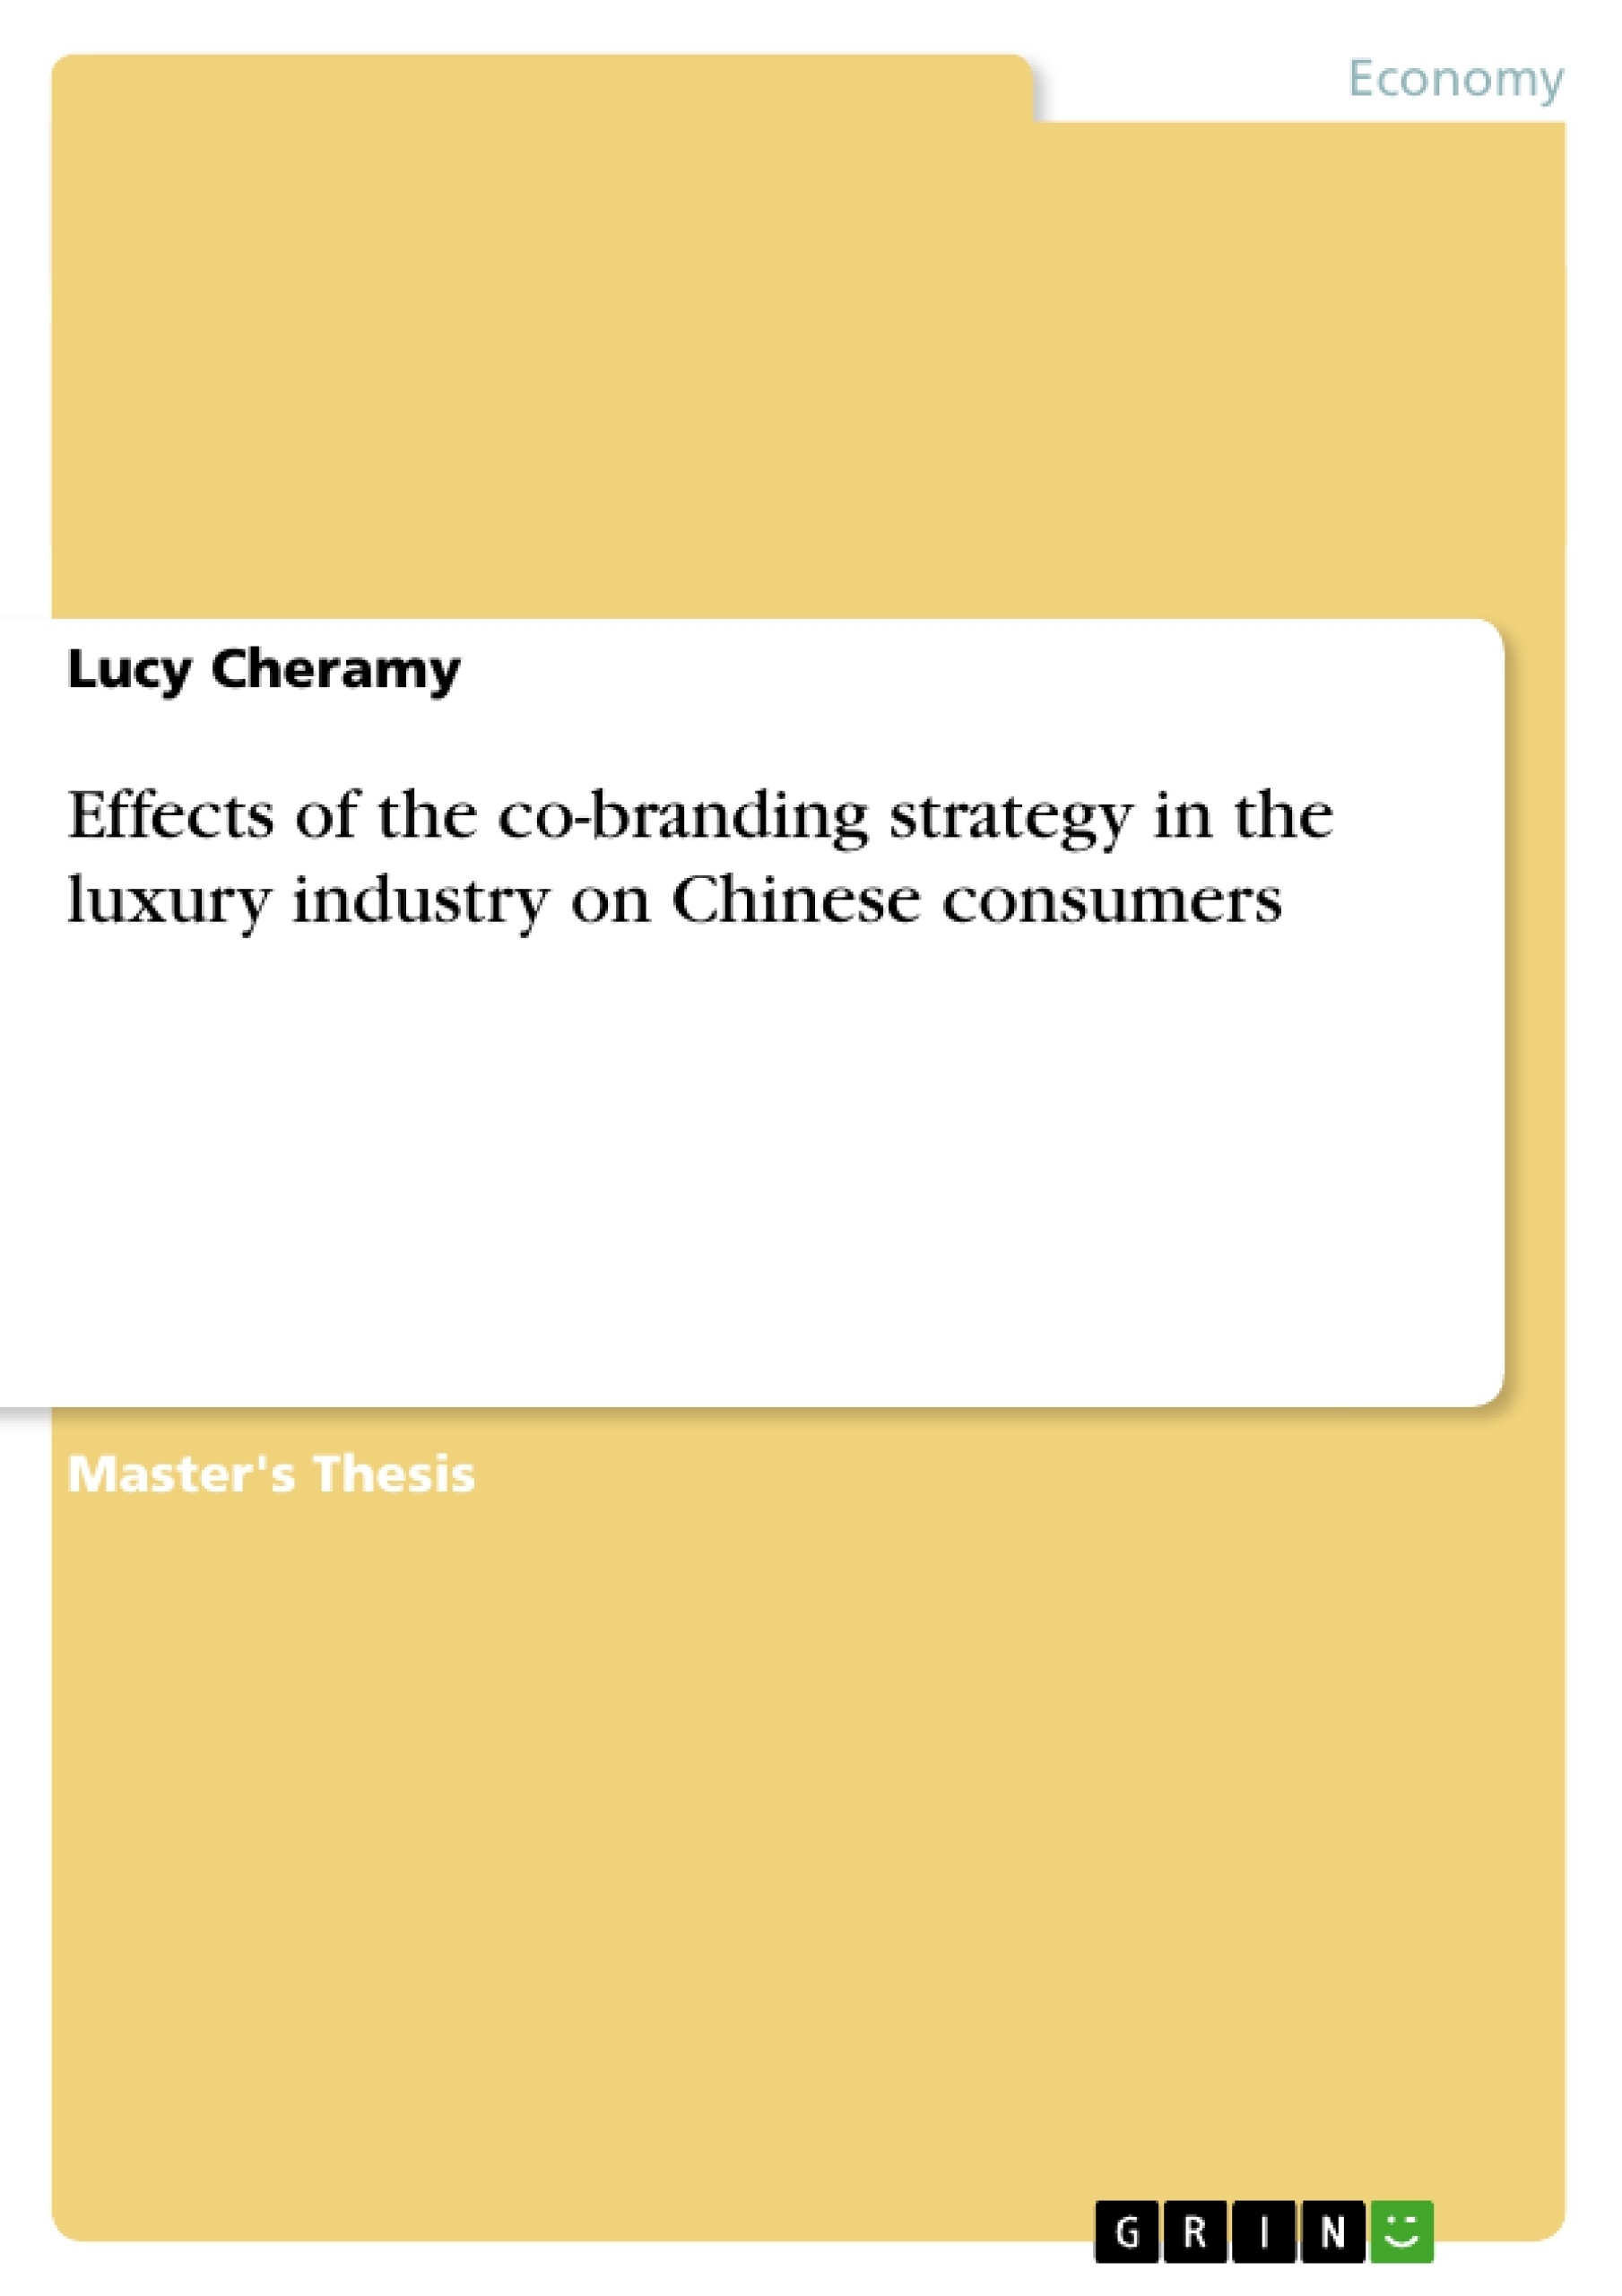 The China Edit, Louis Vuitton, Li & Fung, Sourcing